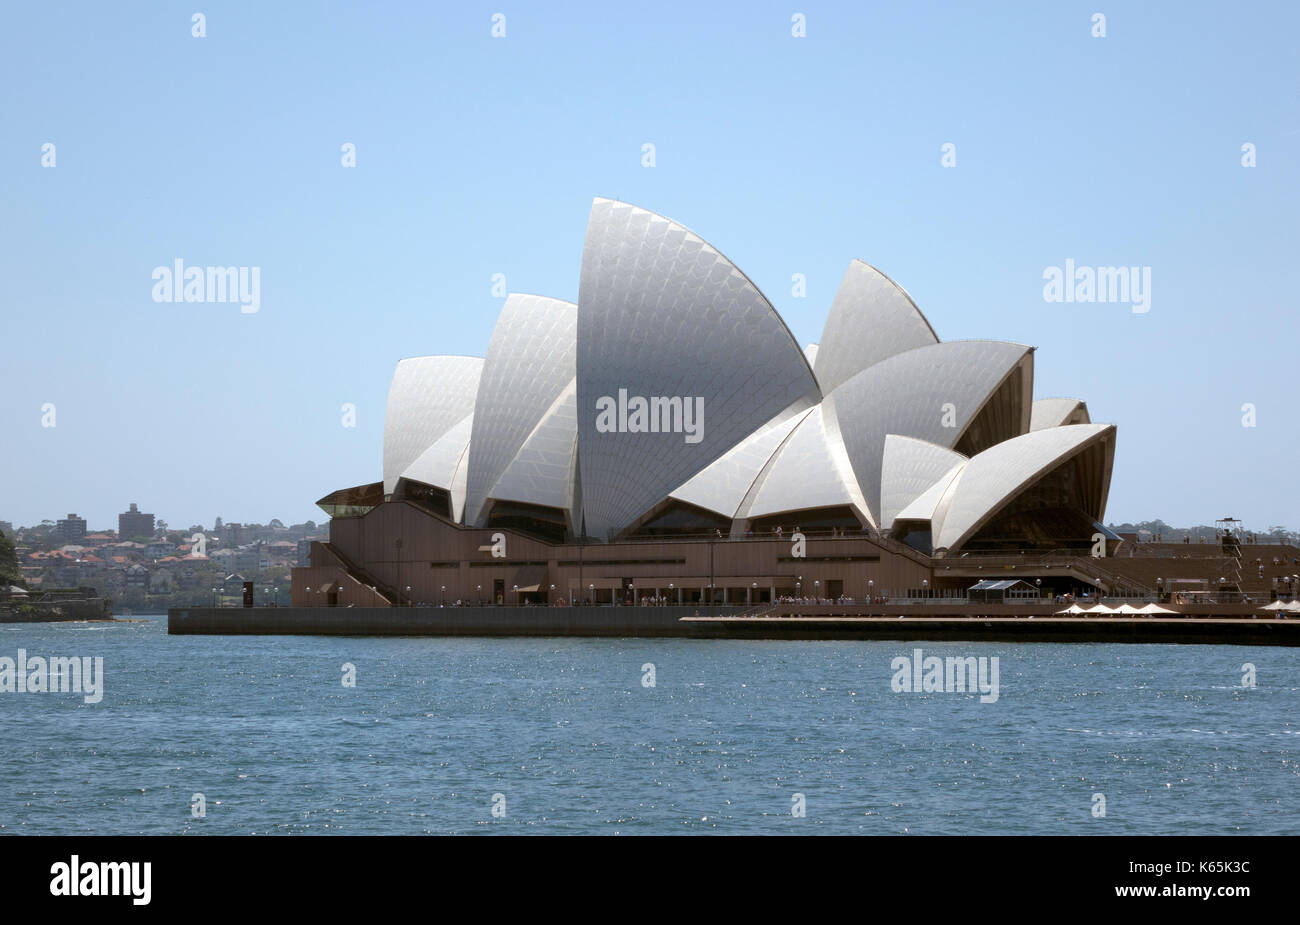 The Iconic Sydney Opera House In Sydney Harbour At Circular Quay Australia A Famousfamous, Australian Landmark Stock Photo